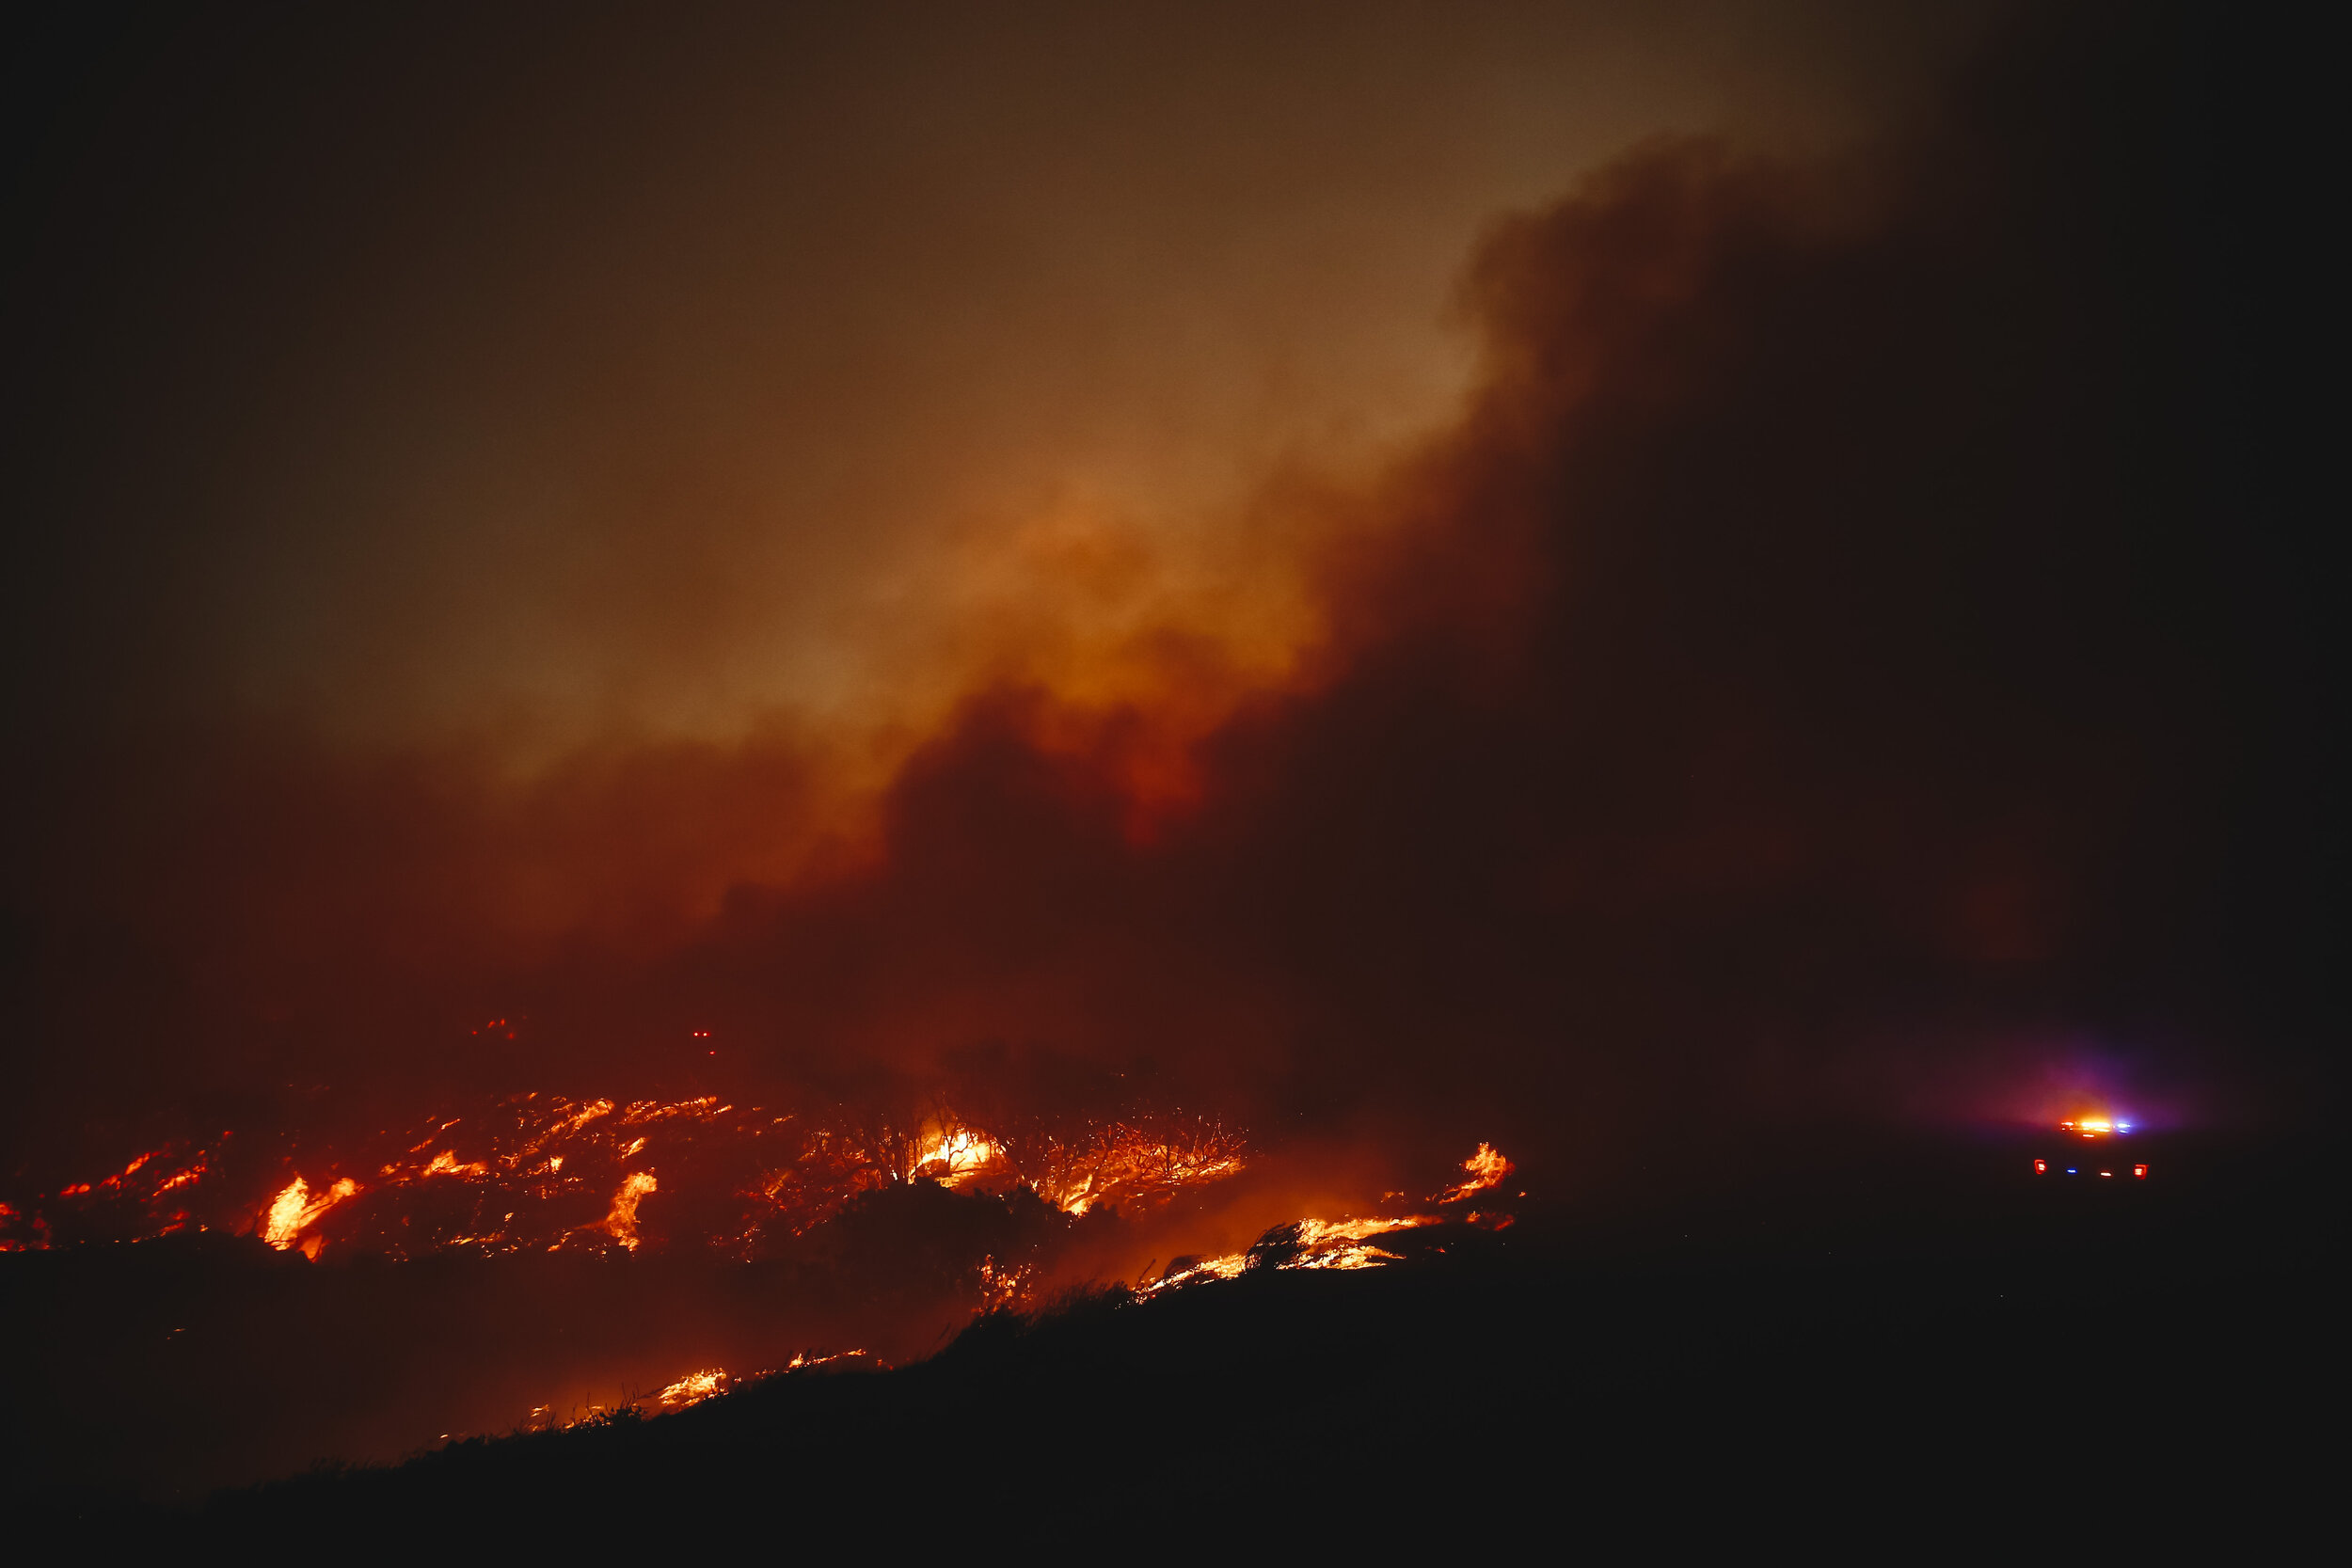   Woolsey Fire, Malibu, CA. 2018  